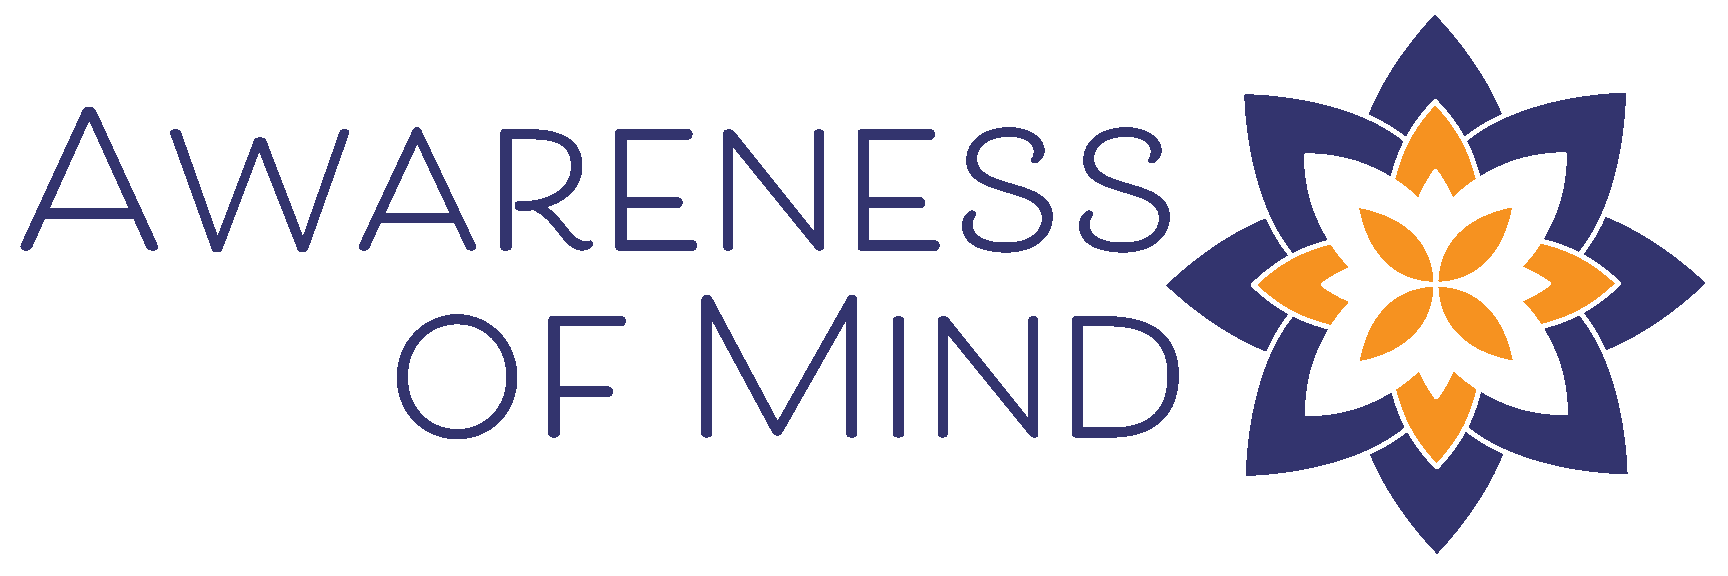 Meditation | Mindfulness | Wellness | Awareness of Mind Logo